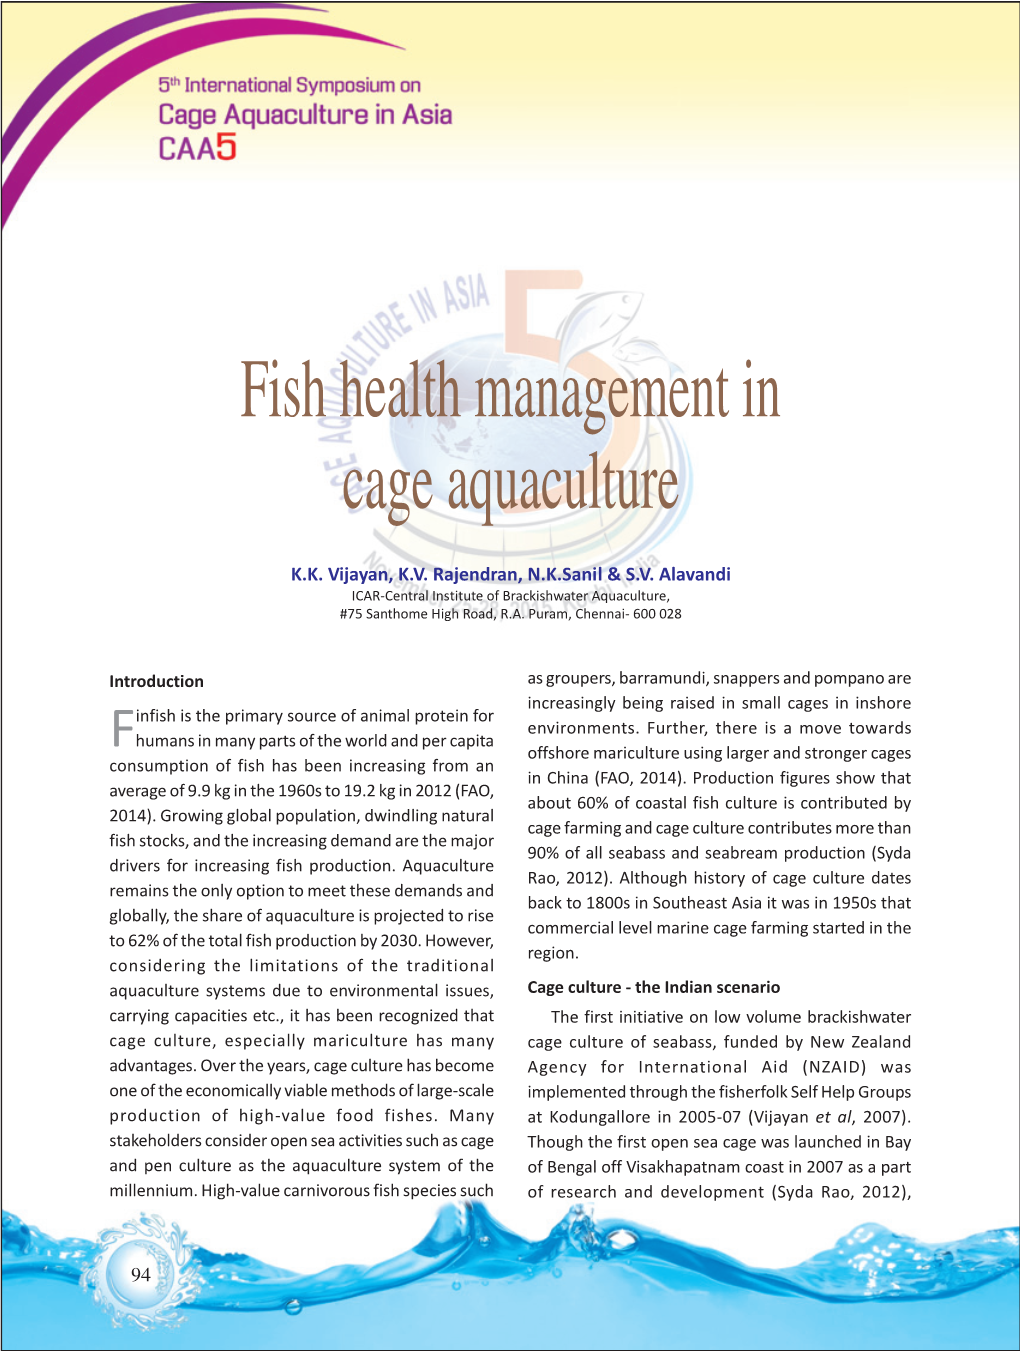 Fish Health Management in Cage Aquaculture